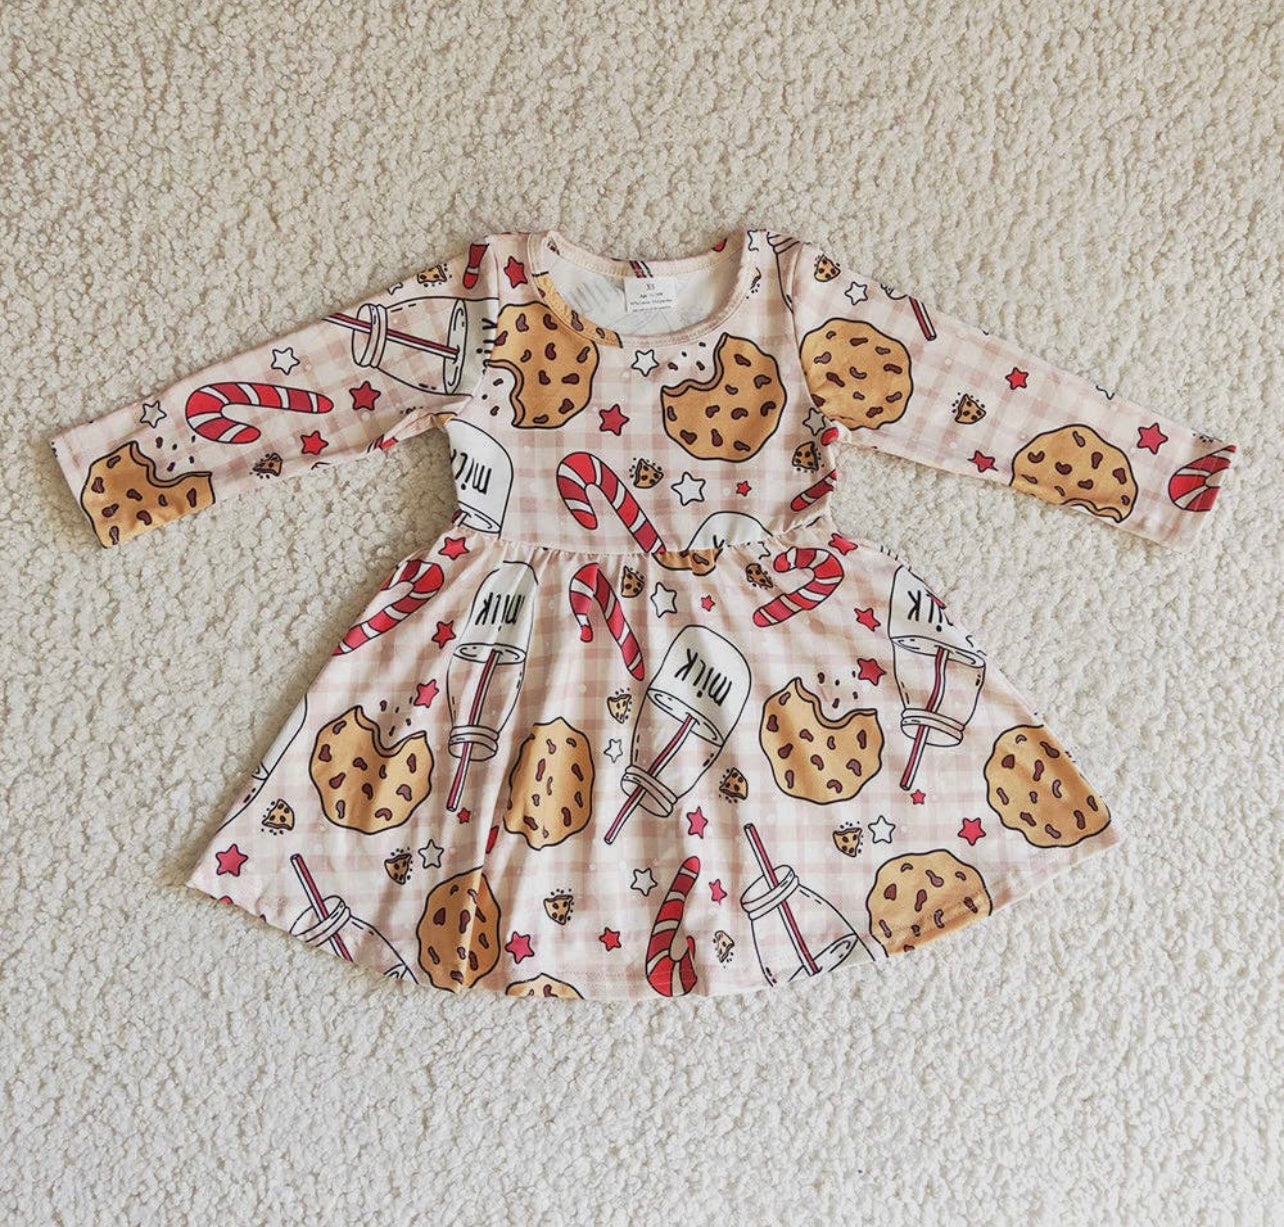 Cookies and milk dress